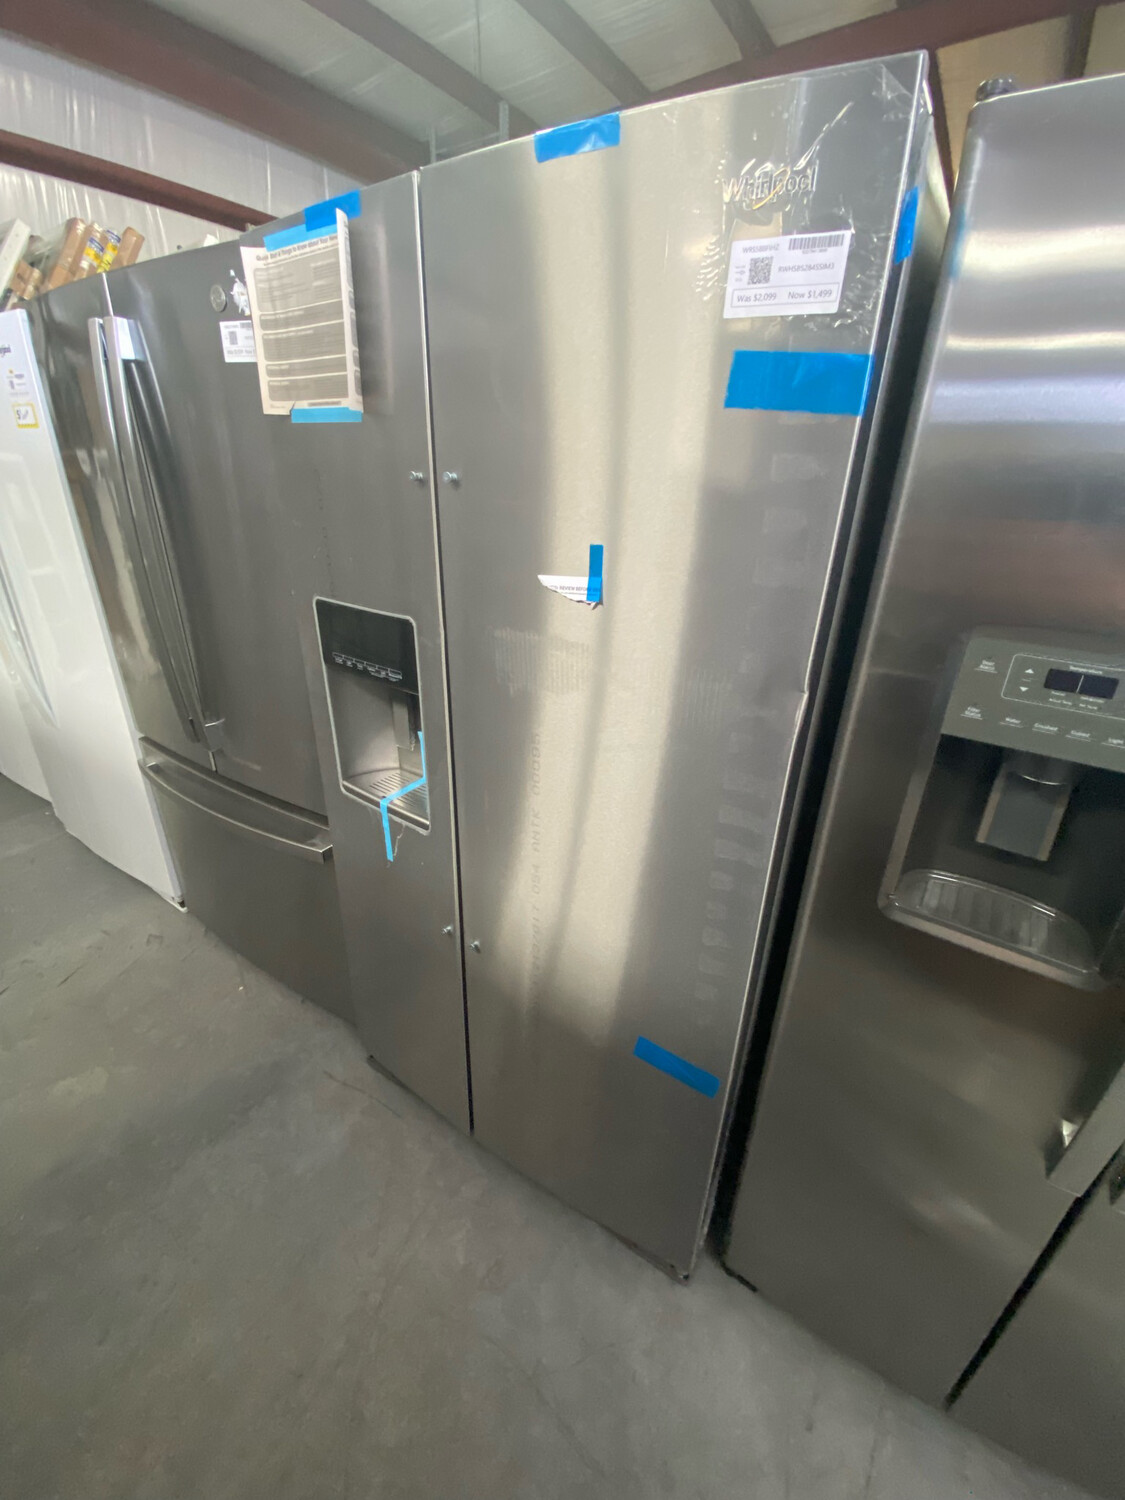 Whirlpool 28.4-cu ft Side-by-Side Refrigerator with Ice Maker (Fingerprint-Resistant Stainless Steel) Model WRS588FIHZ MSRP $2099